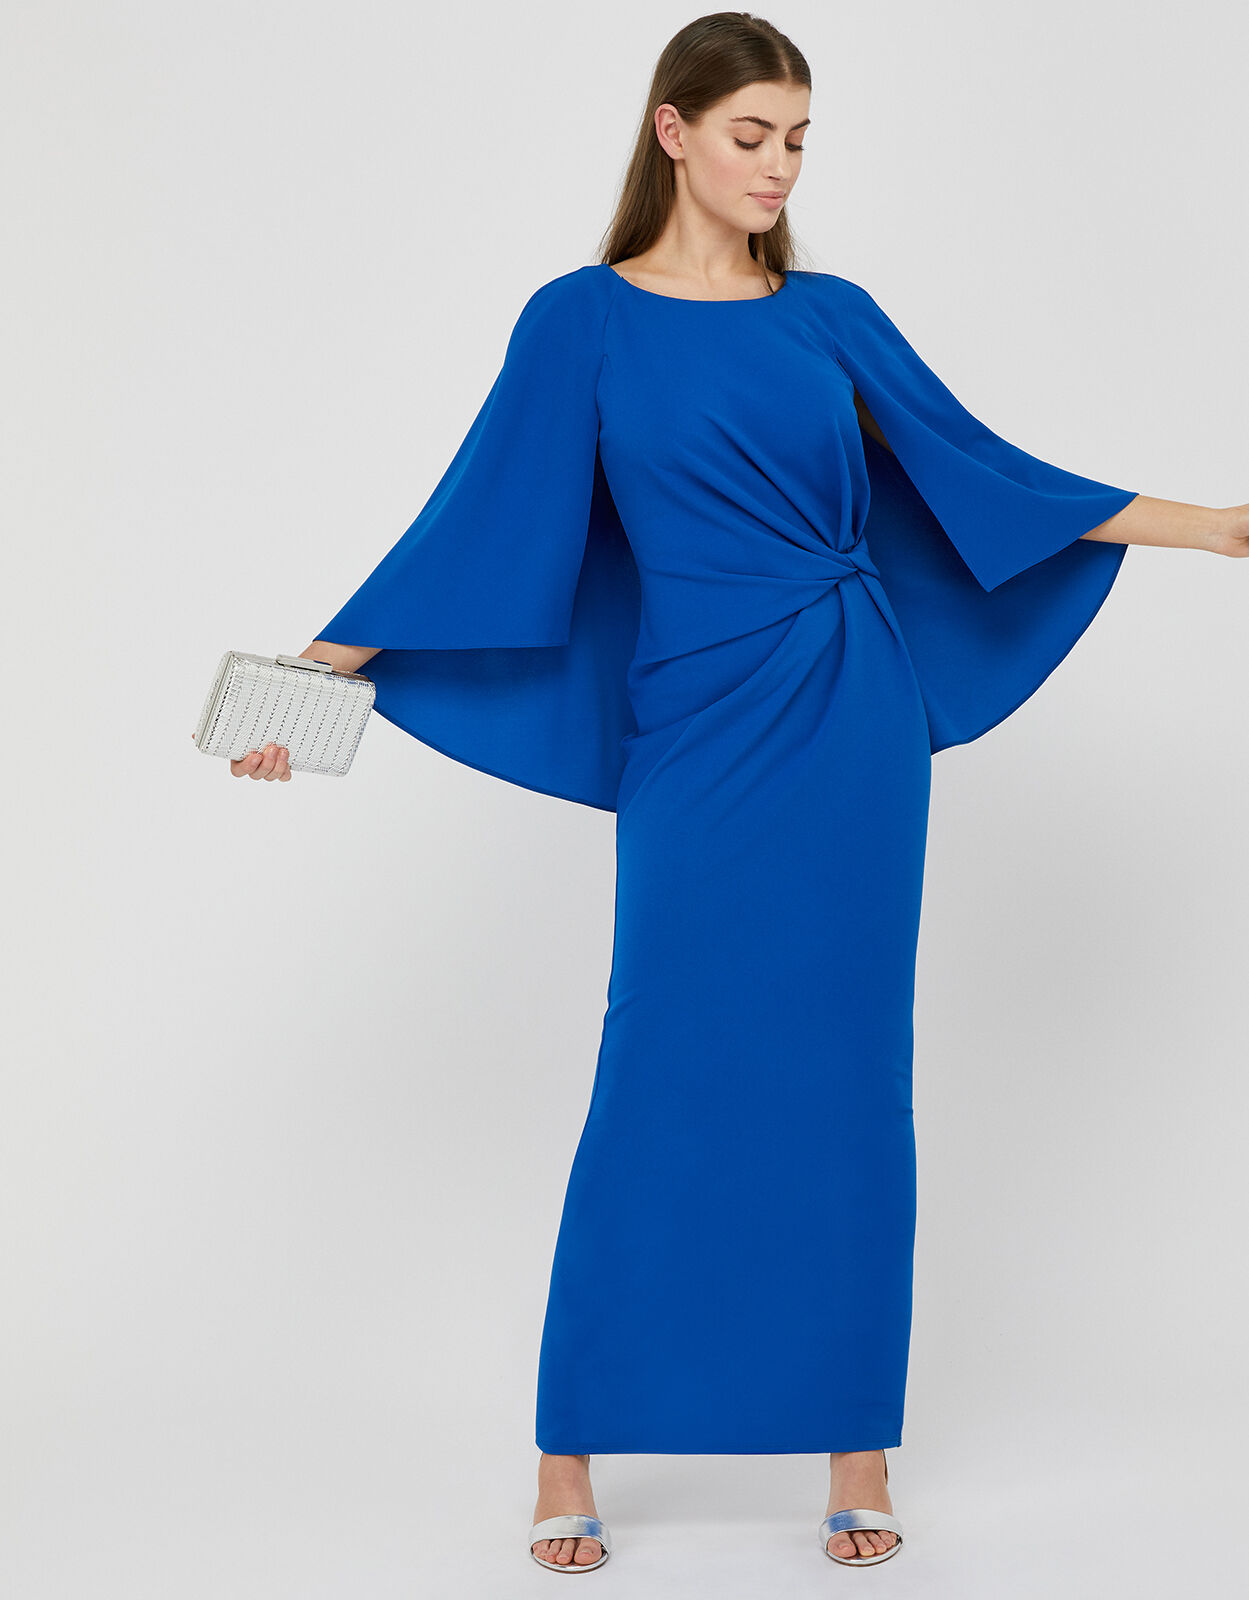 Cape Maxi Dress – Fashion dresses